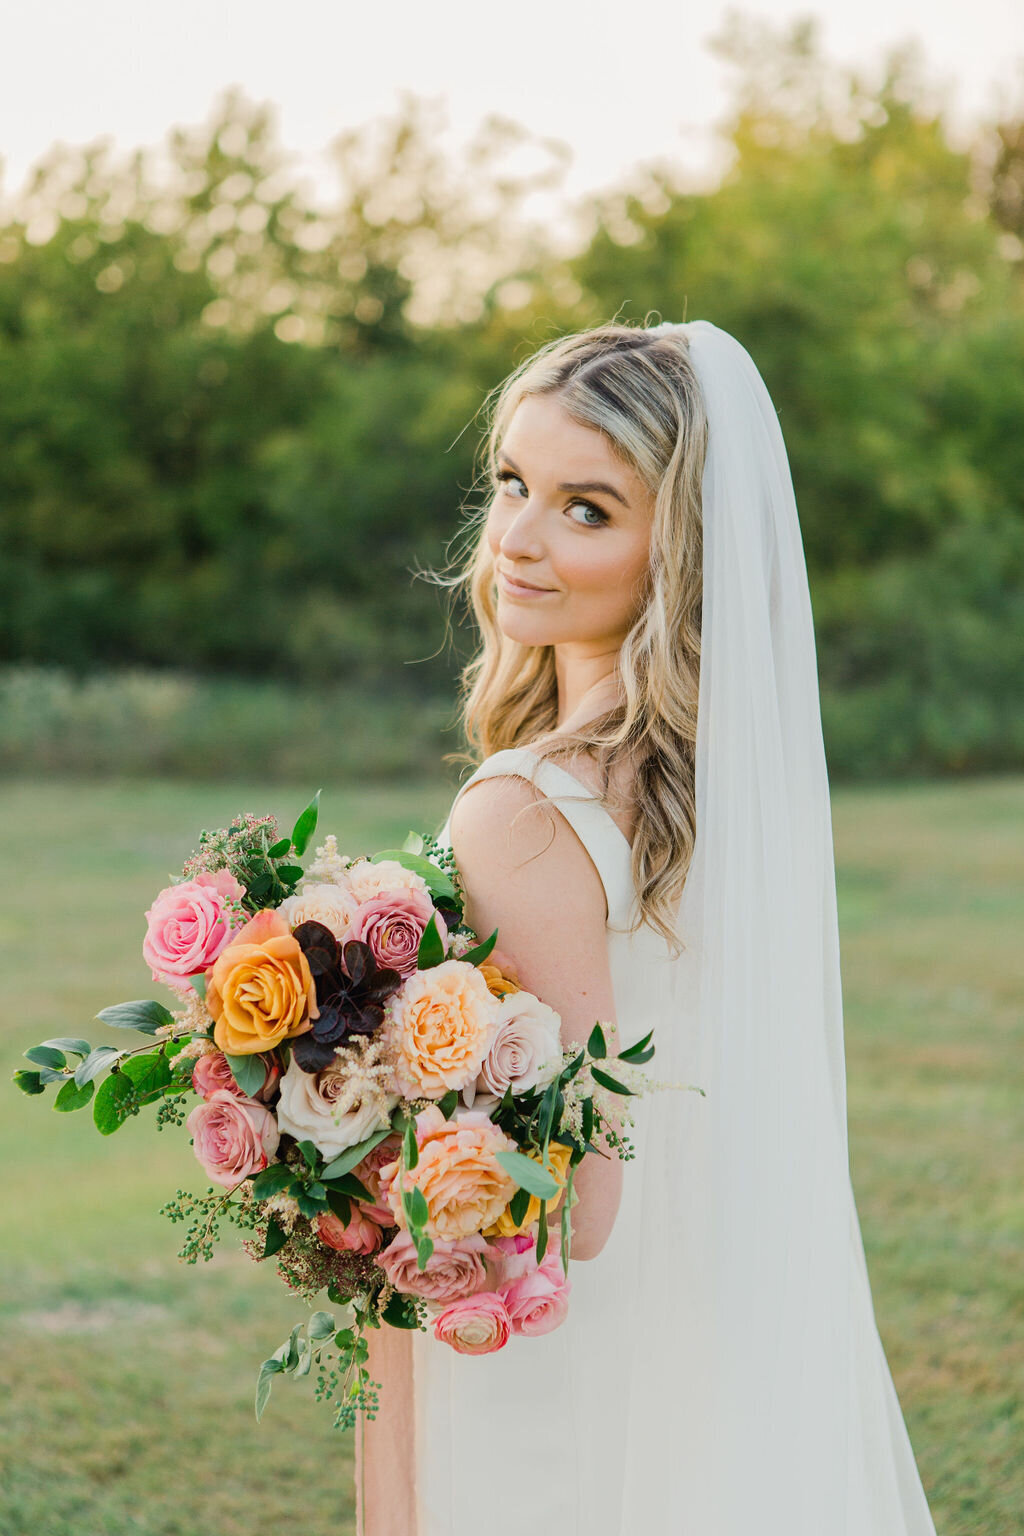 Bride with lush wedding bouquet by Vella Nest Floral Design, Dallas Fort Worth Wedding Florist